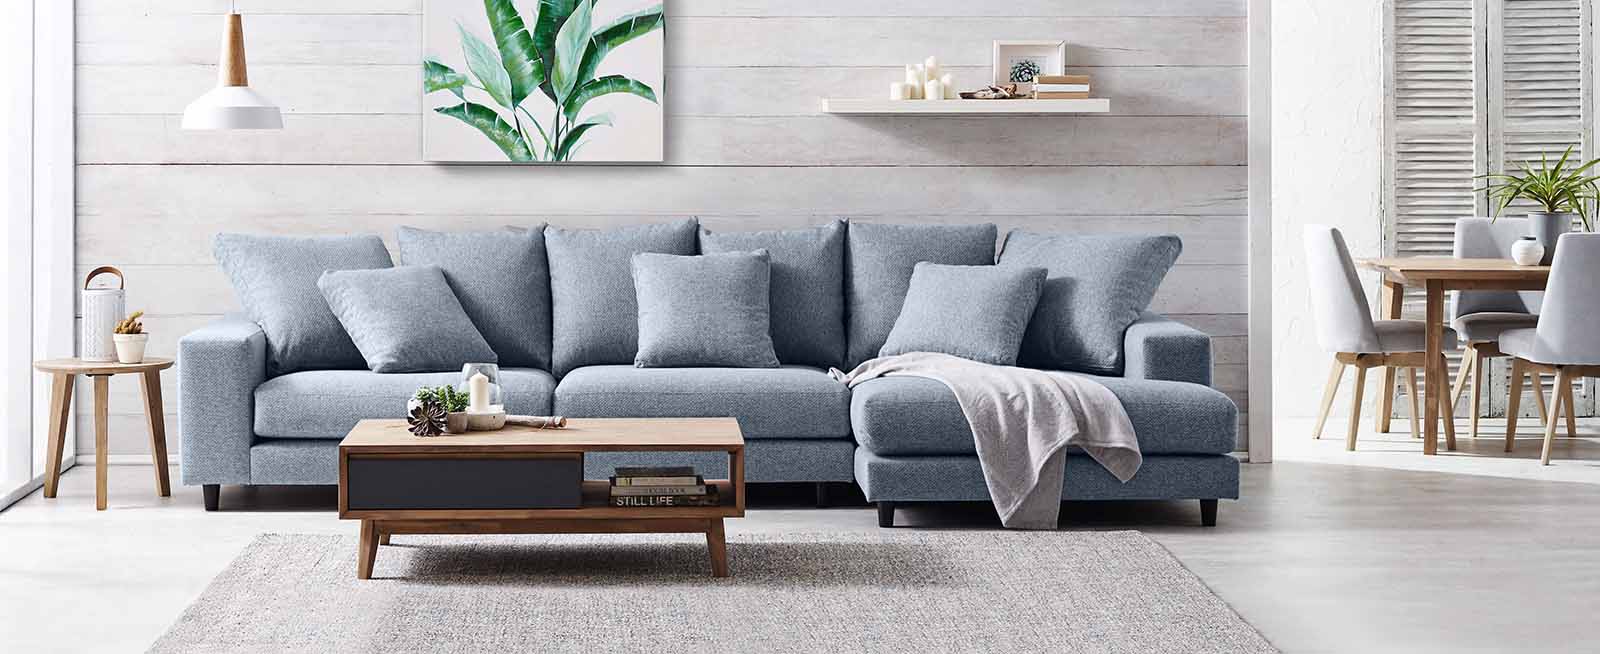 australian made sofa beds sydney